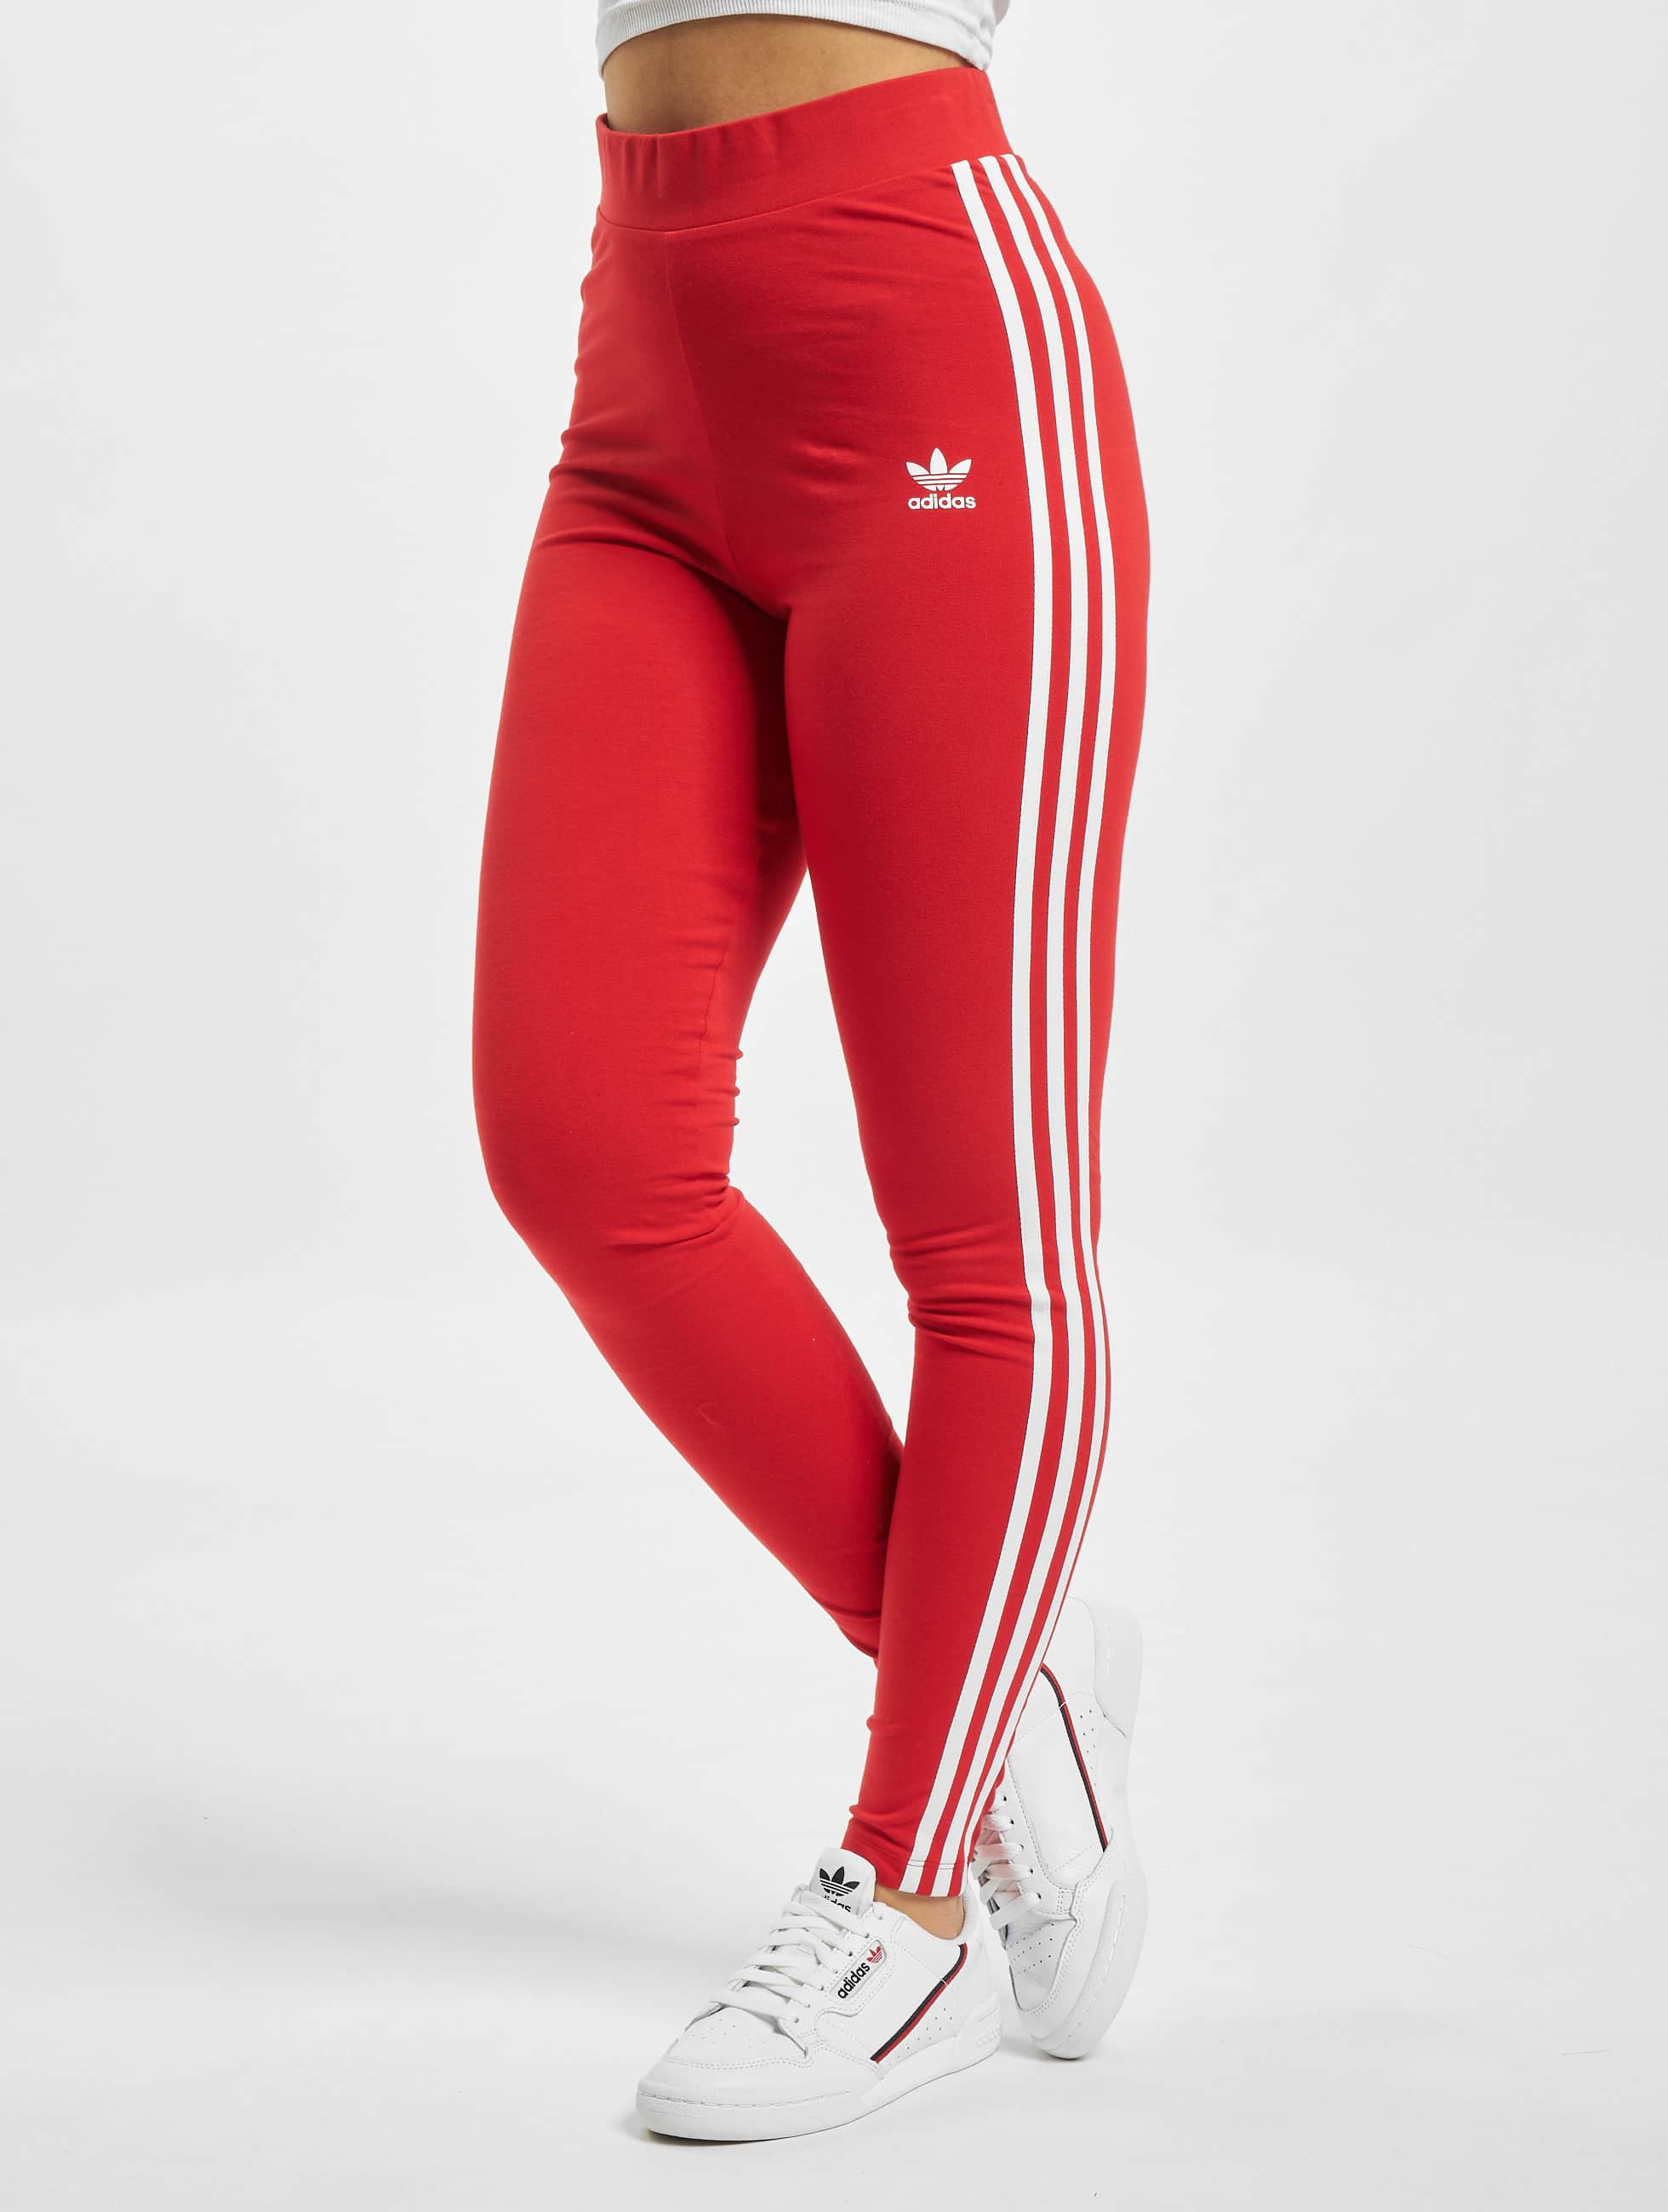 adidas Originals broek / Legging 3 Stripes rood